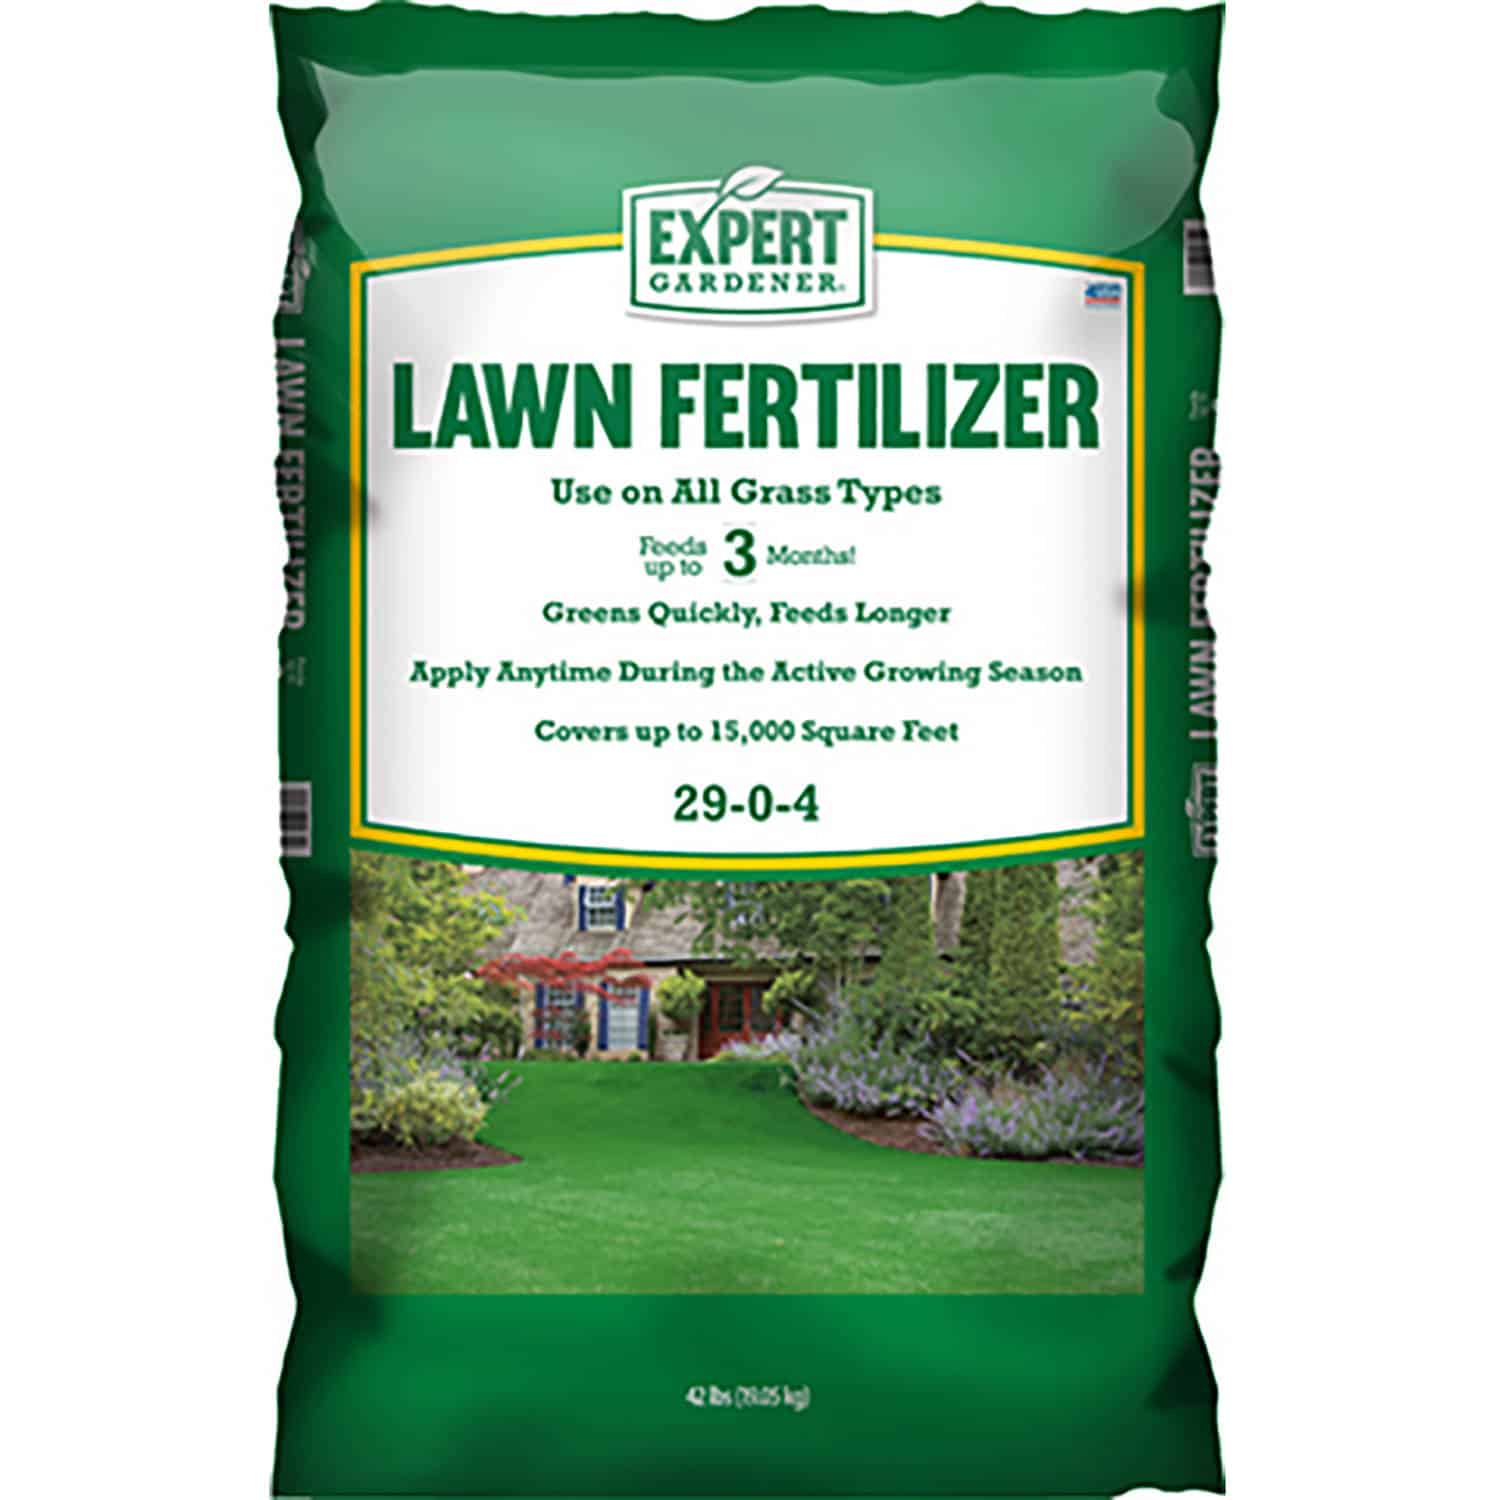 Expert Gardener 15,000 Square Feet Lawn Fertilizer, 29